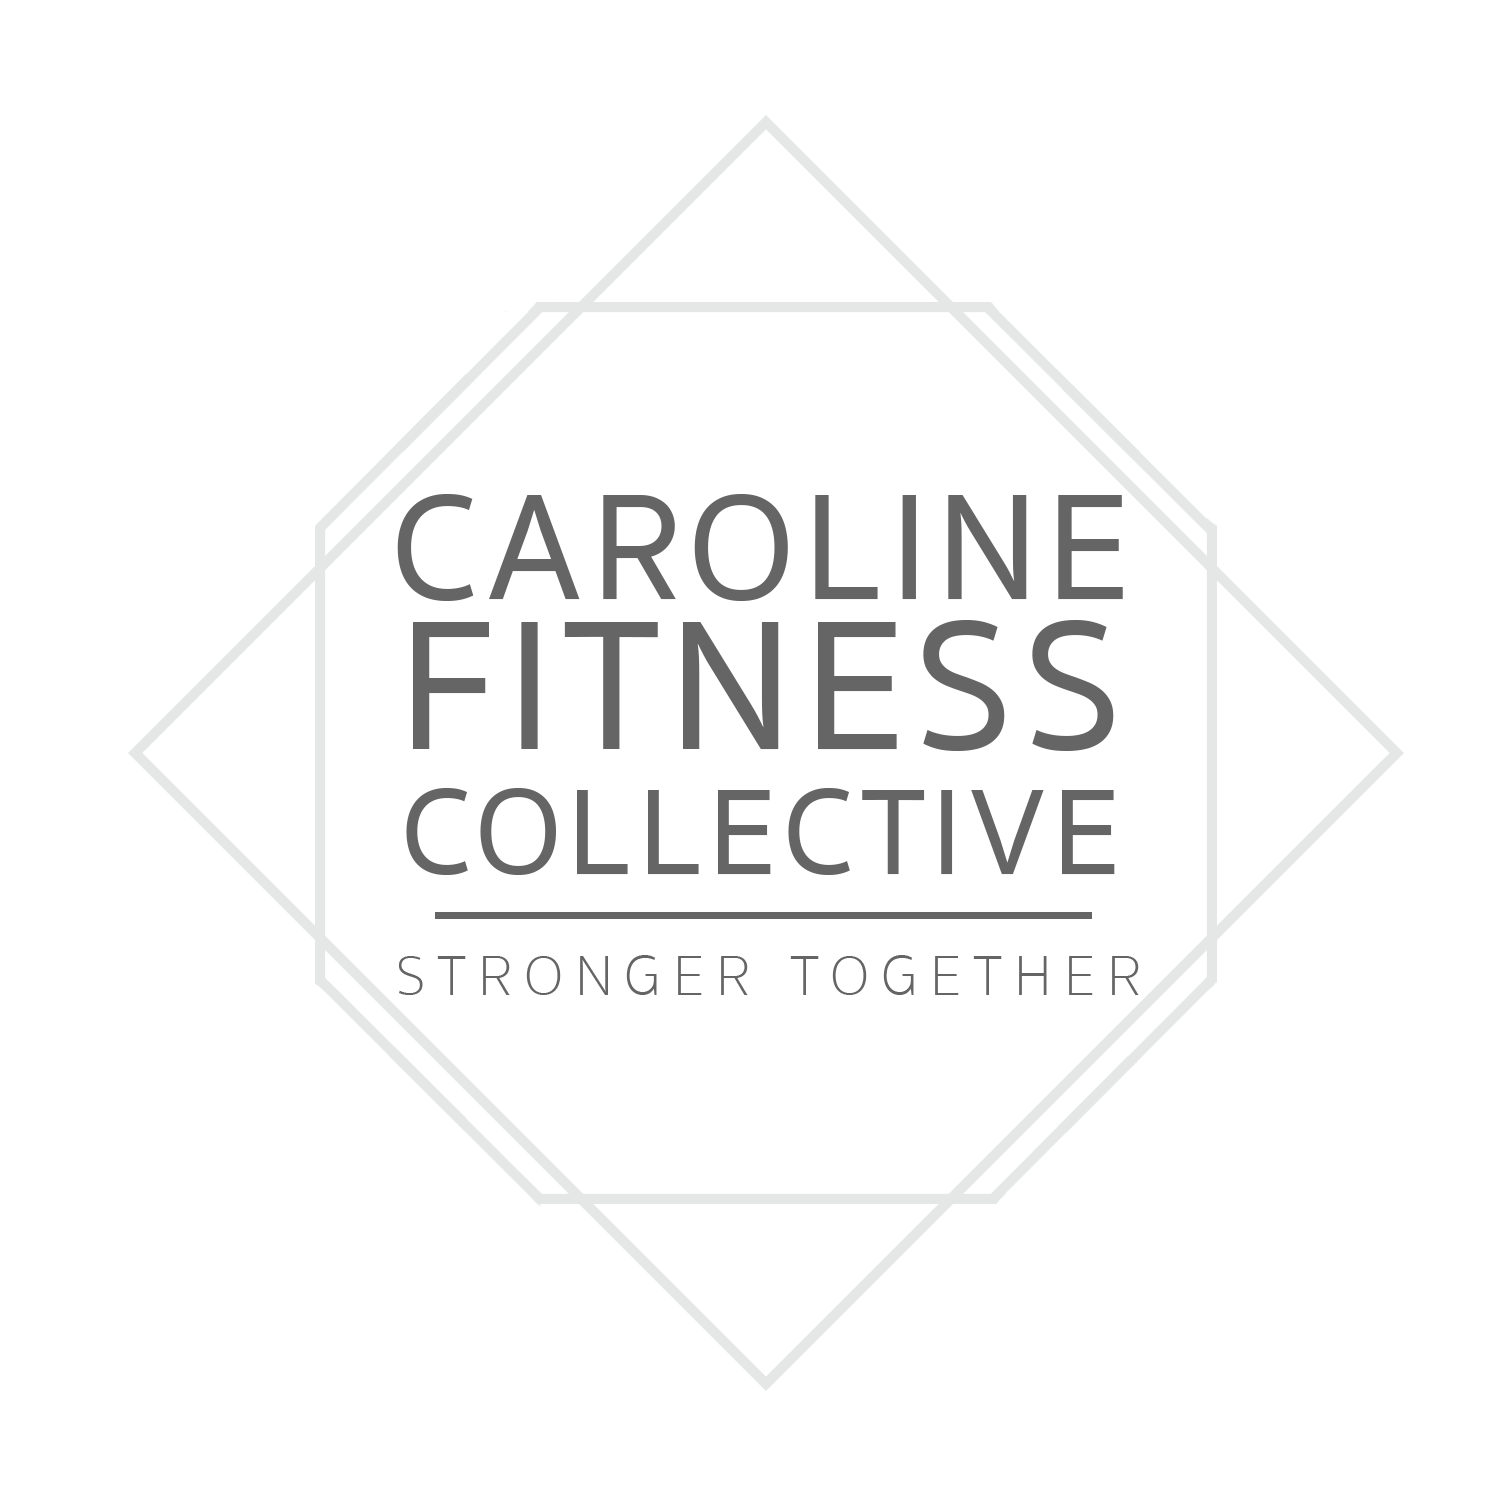 Caroline Fitness Collective